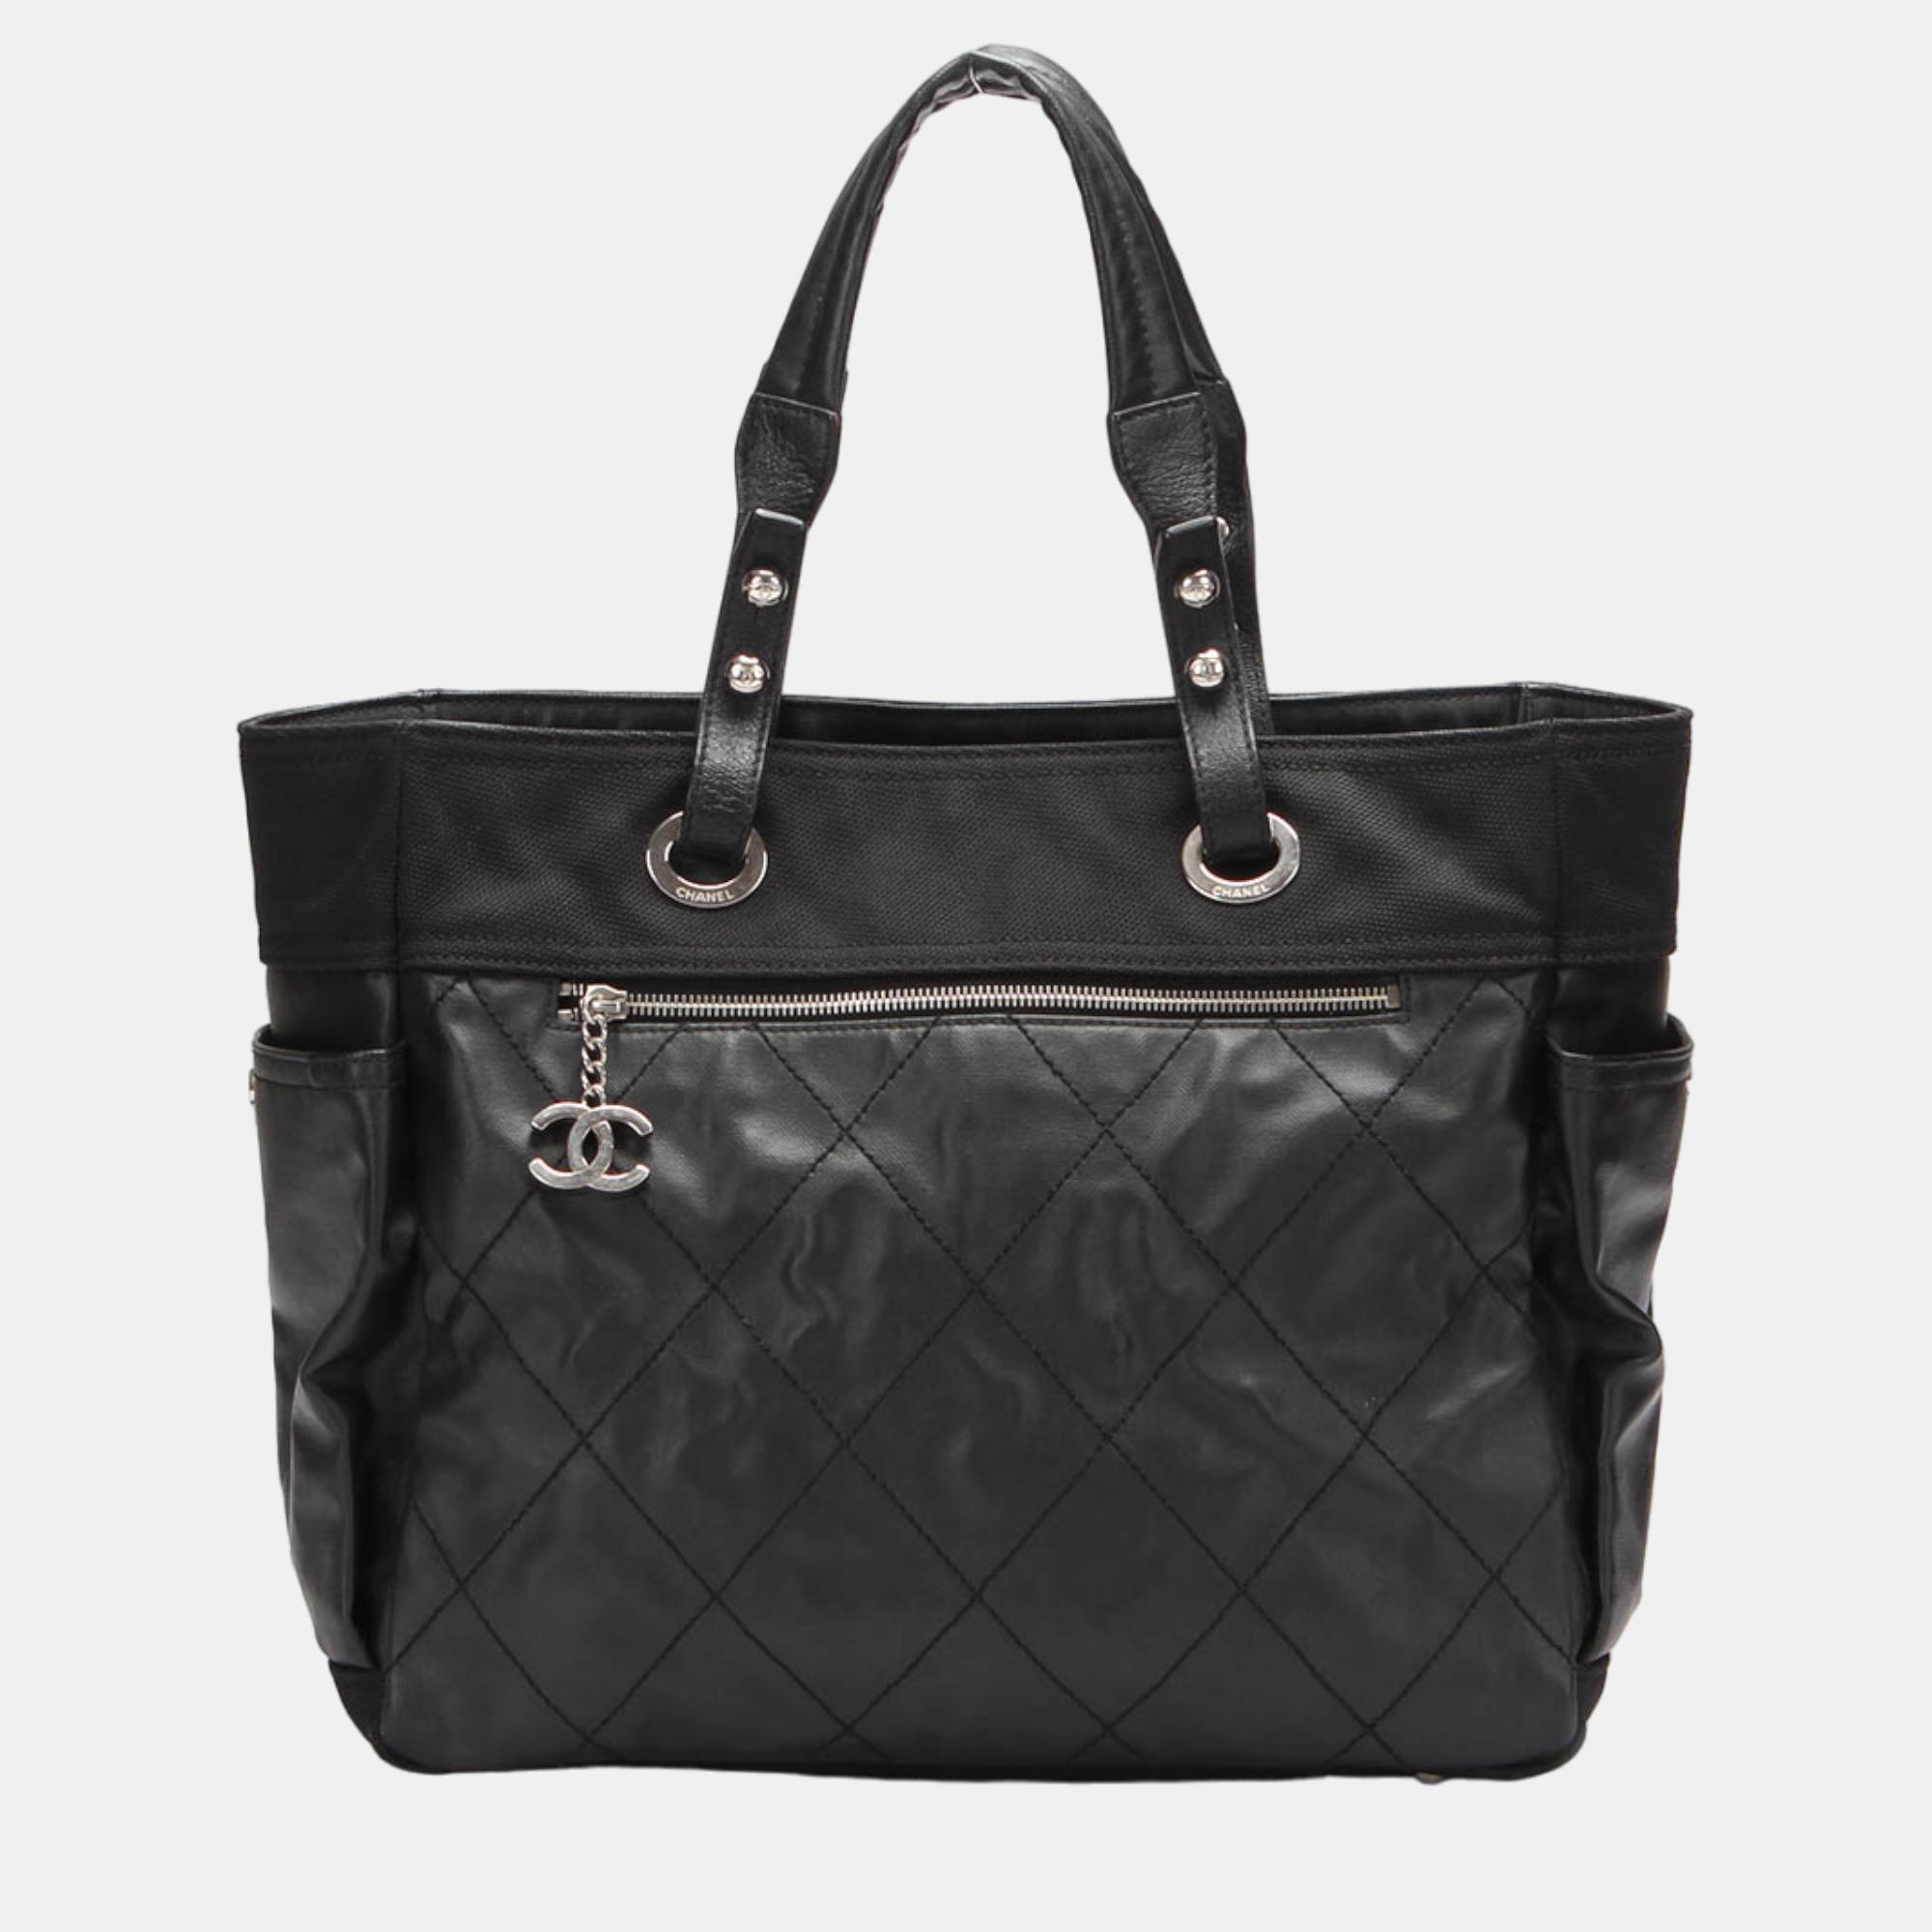 Chanel black leather large paris biarritz tote bag